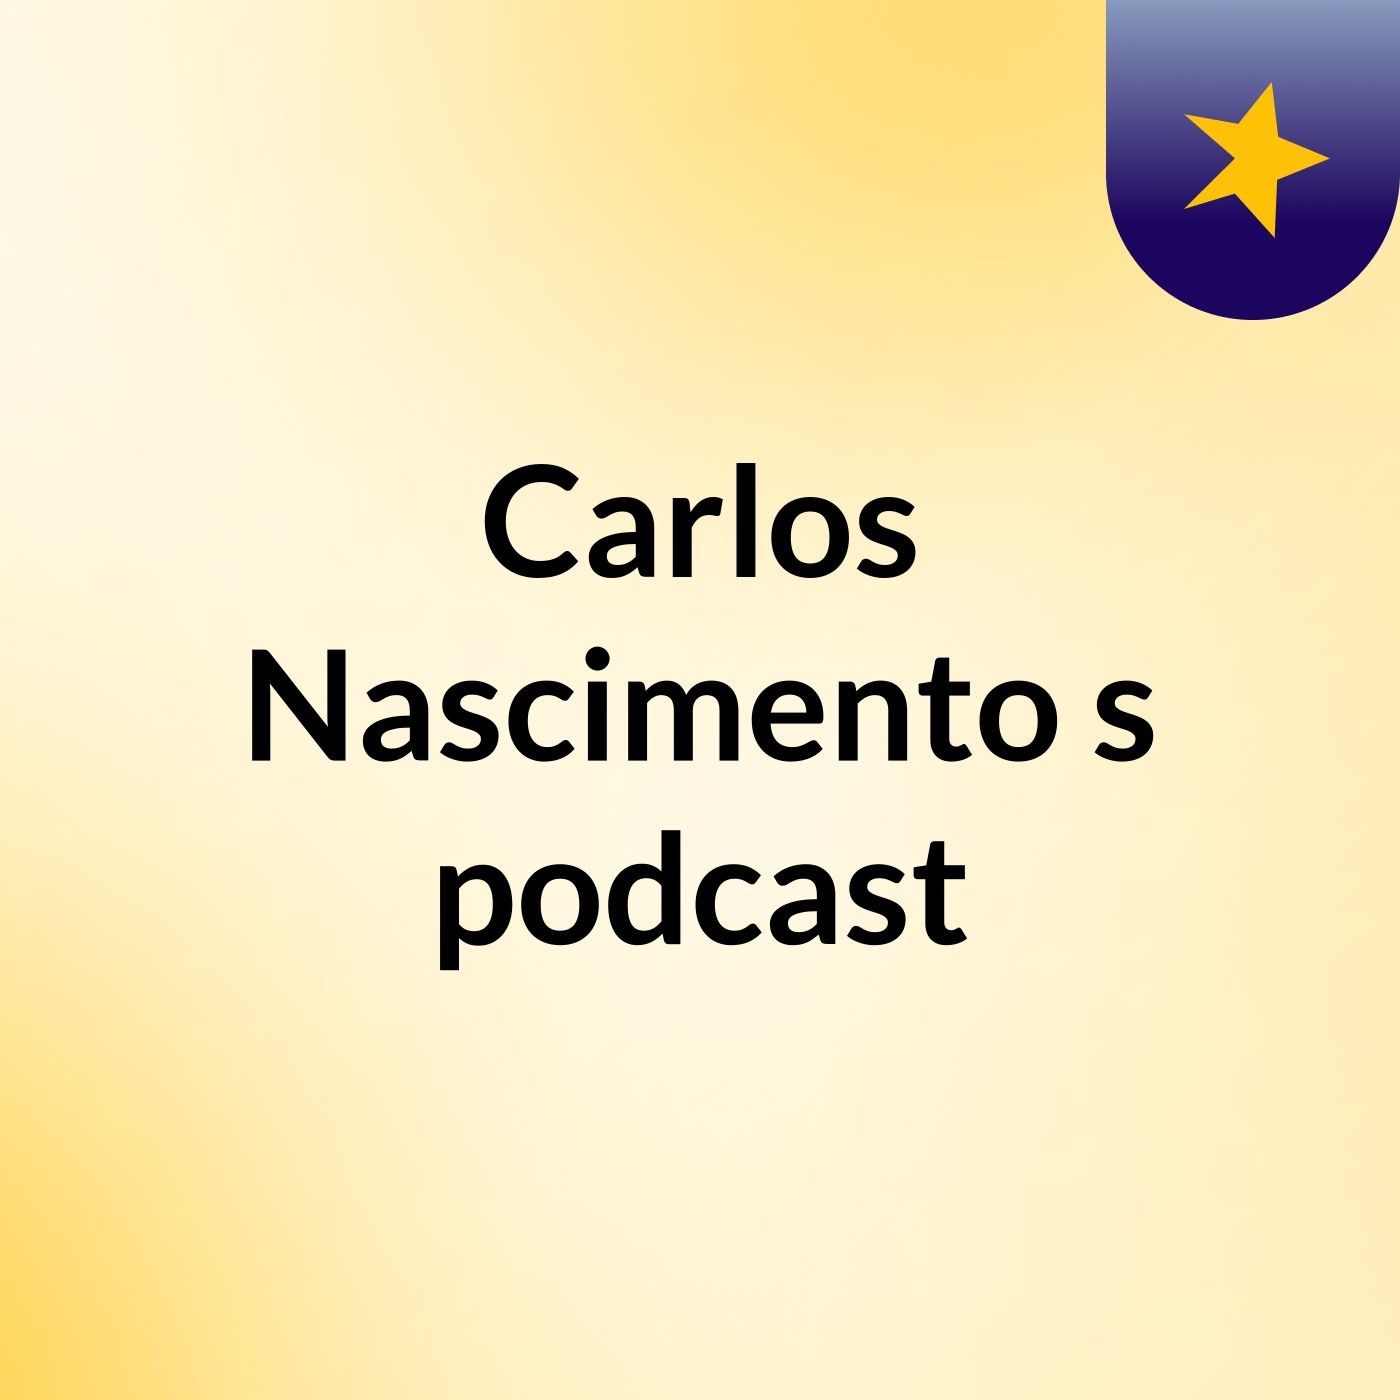 Carlos Nascimento's podcast